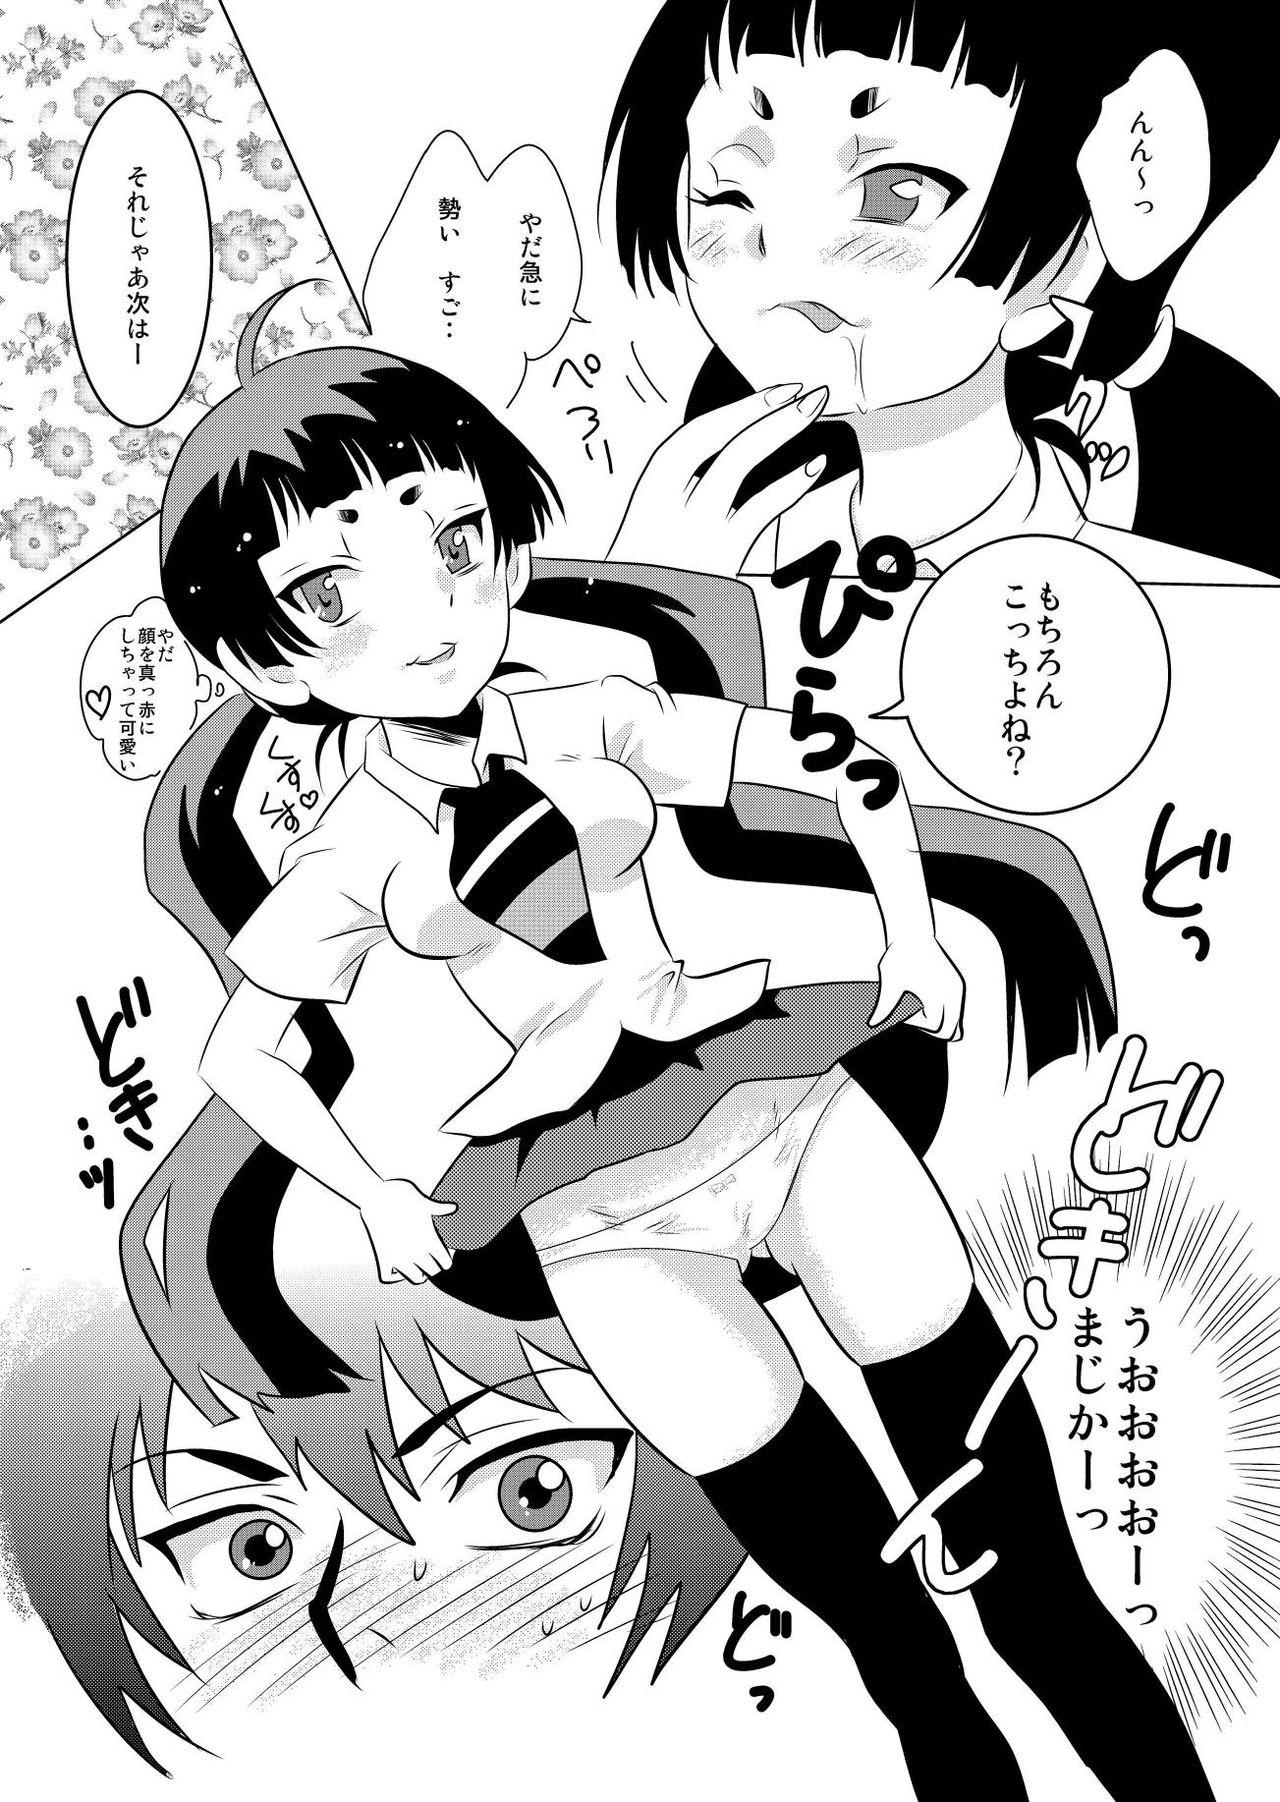 Hardon Atashi ni Shitagae!! - Ao no exorcist Girlnextdoor - Page 6